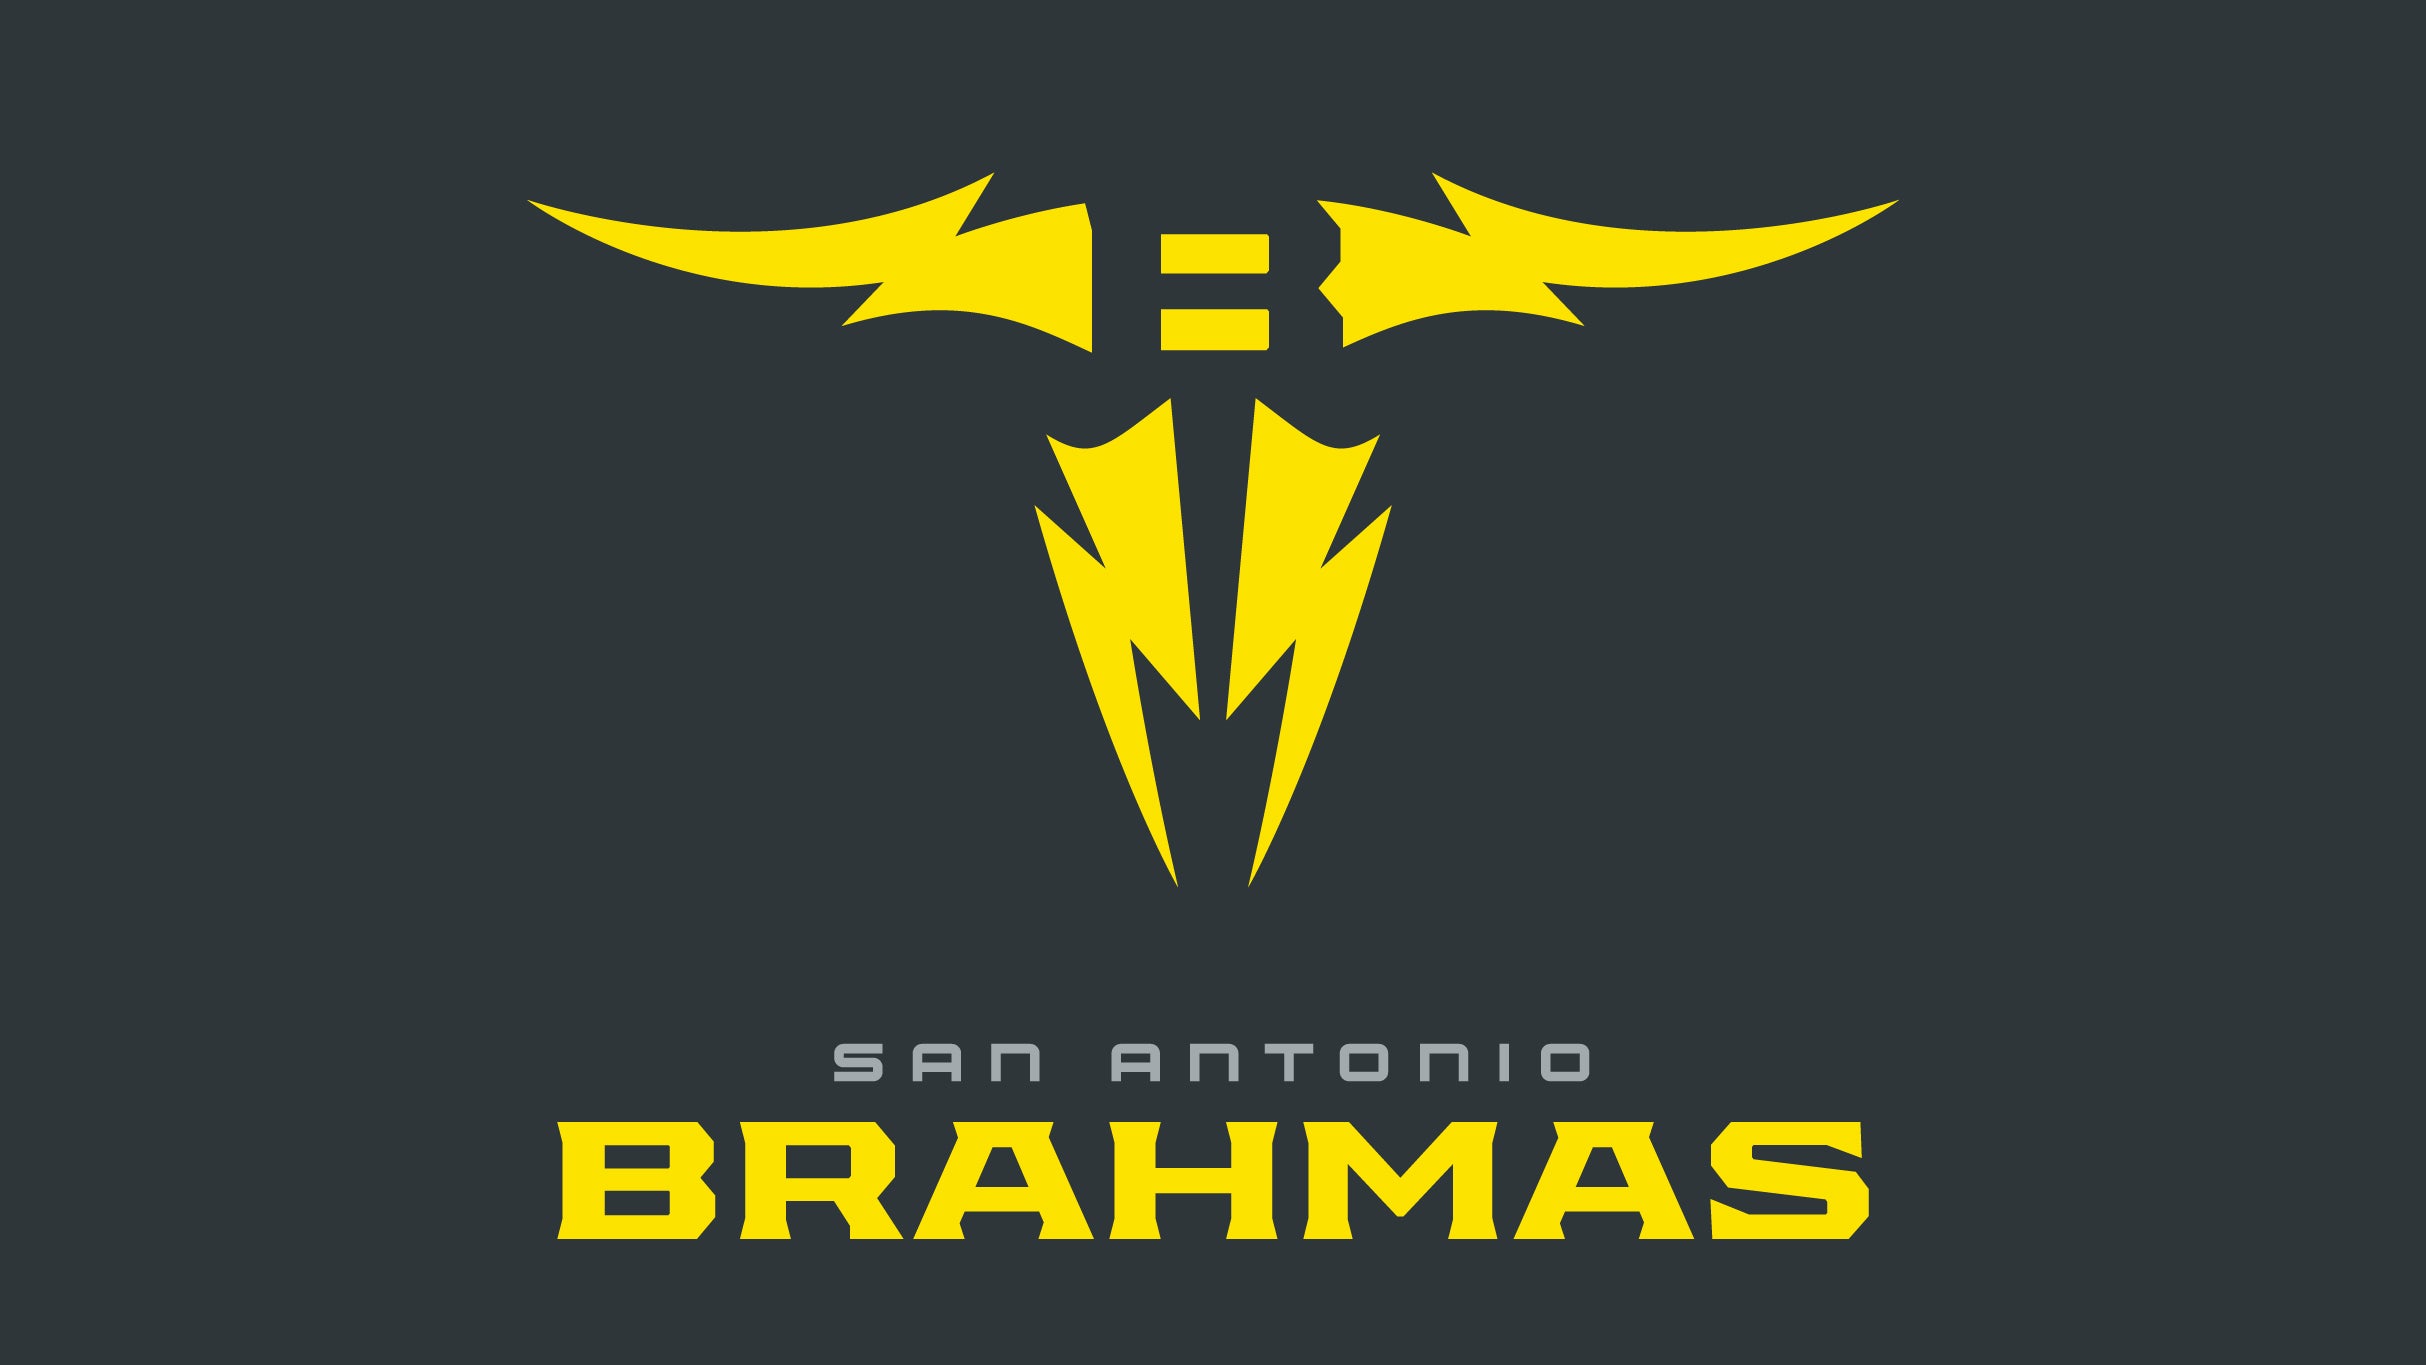 San Antonio Brahmas vs. Arlington Renegades presale code for show tickets in San Antonio, TX (Alamodome)